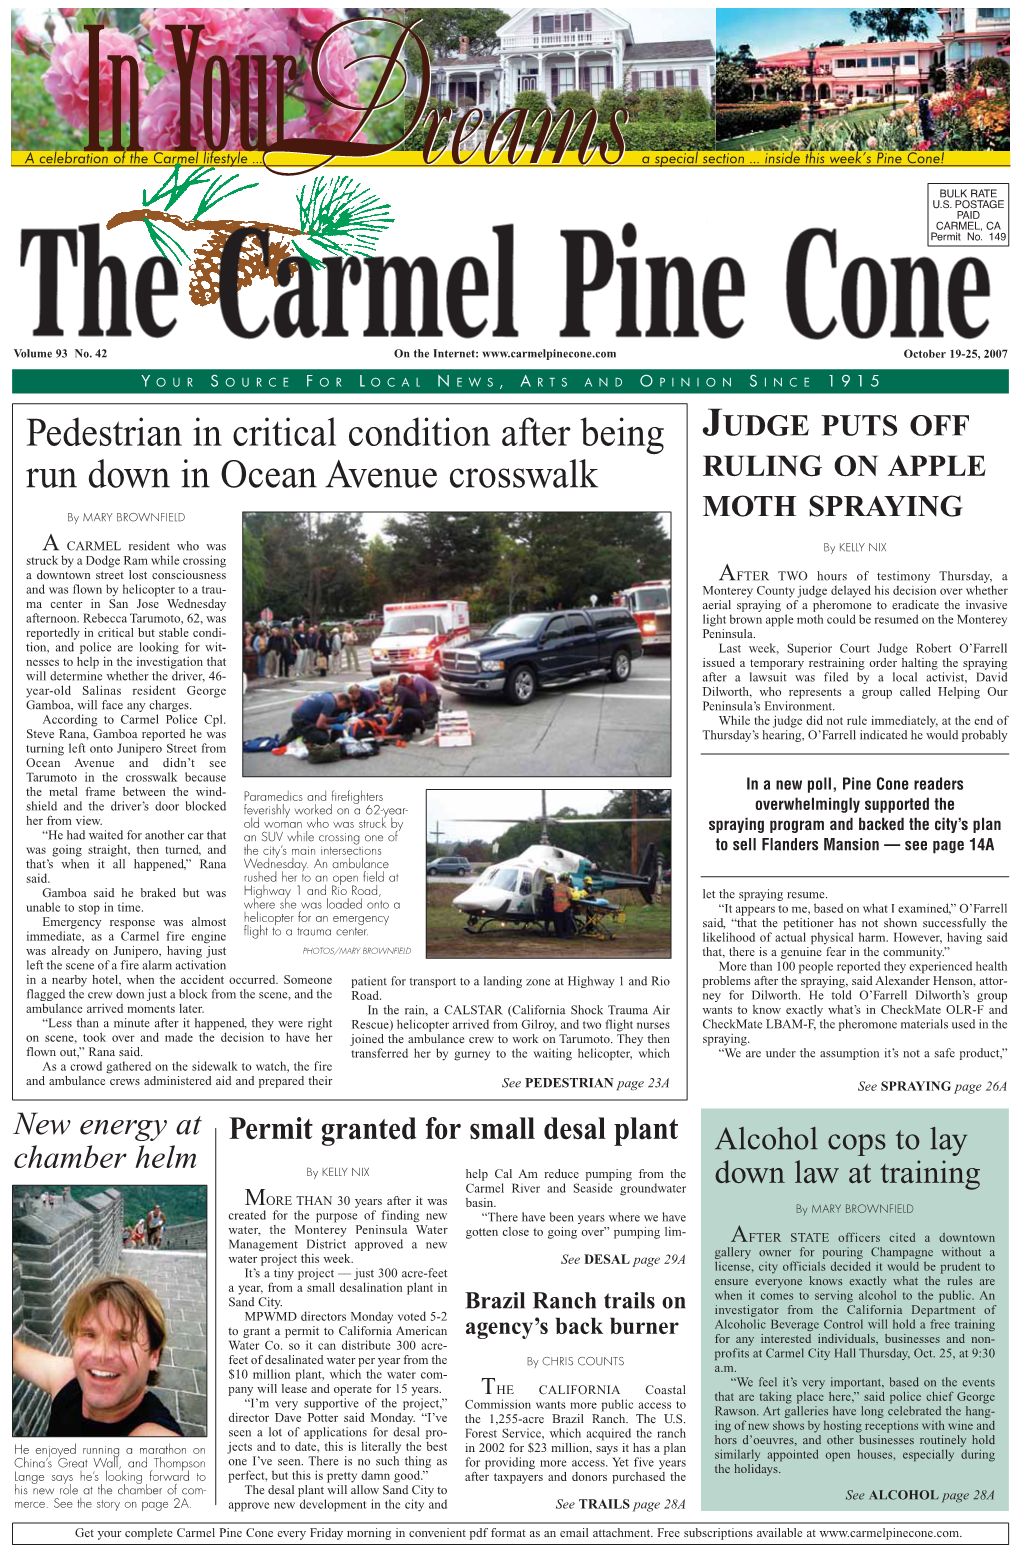 Carmel Pine Cone, October 19, 2007